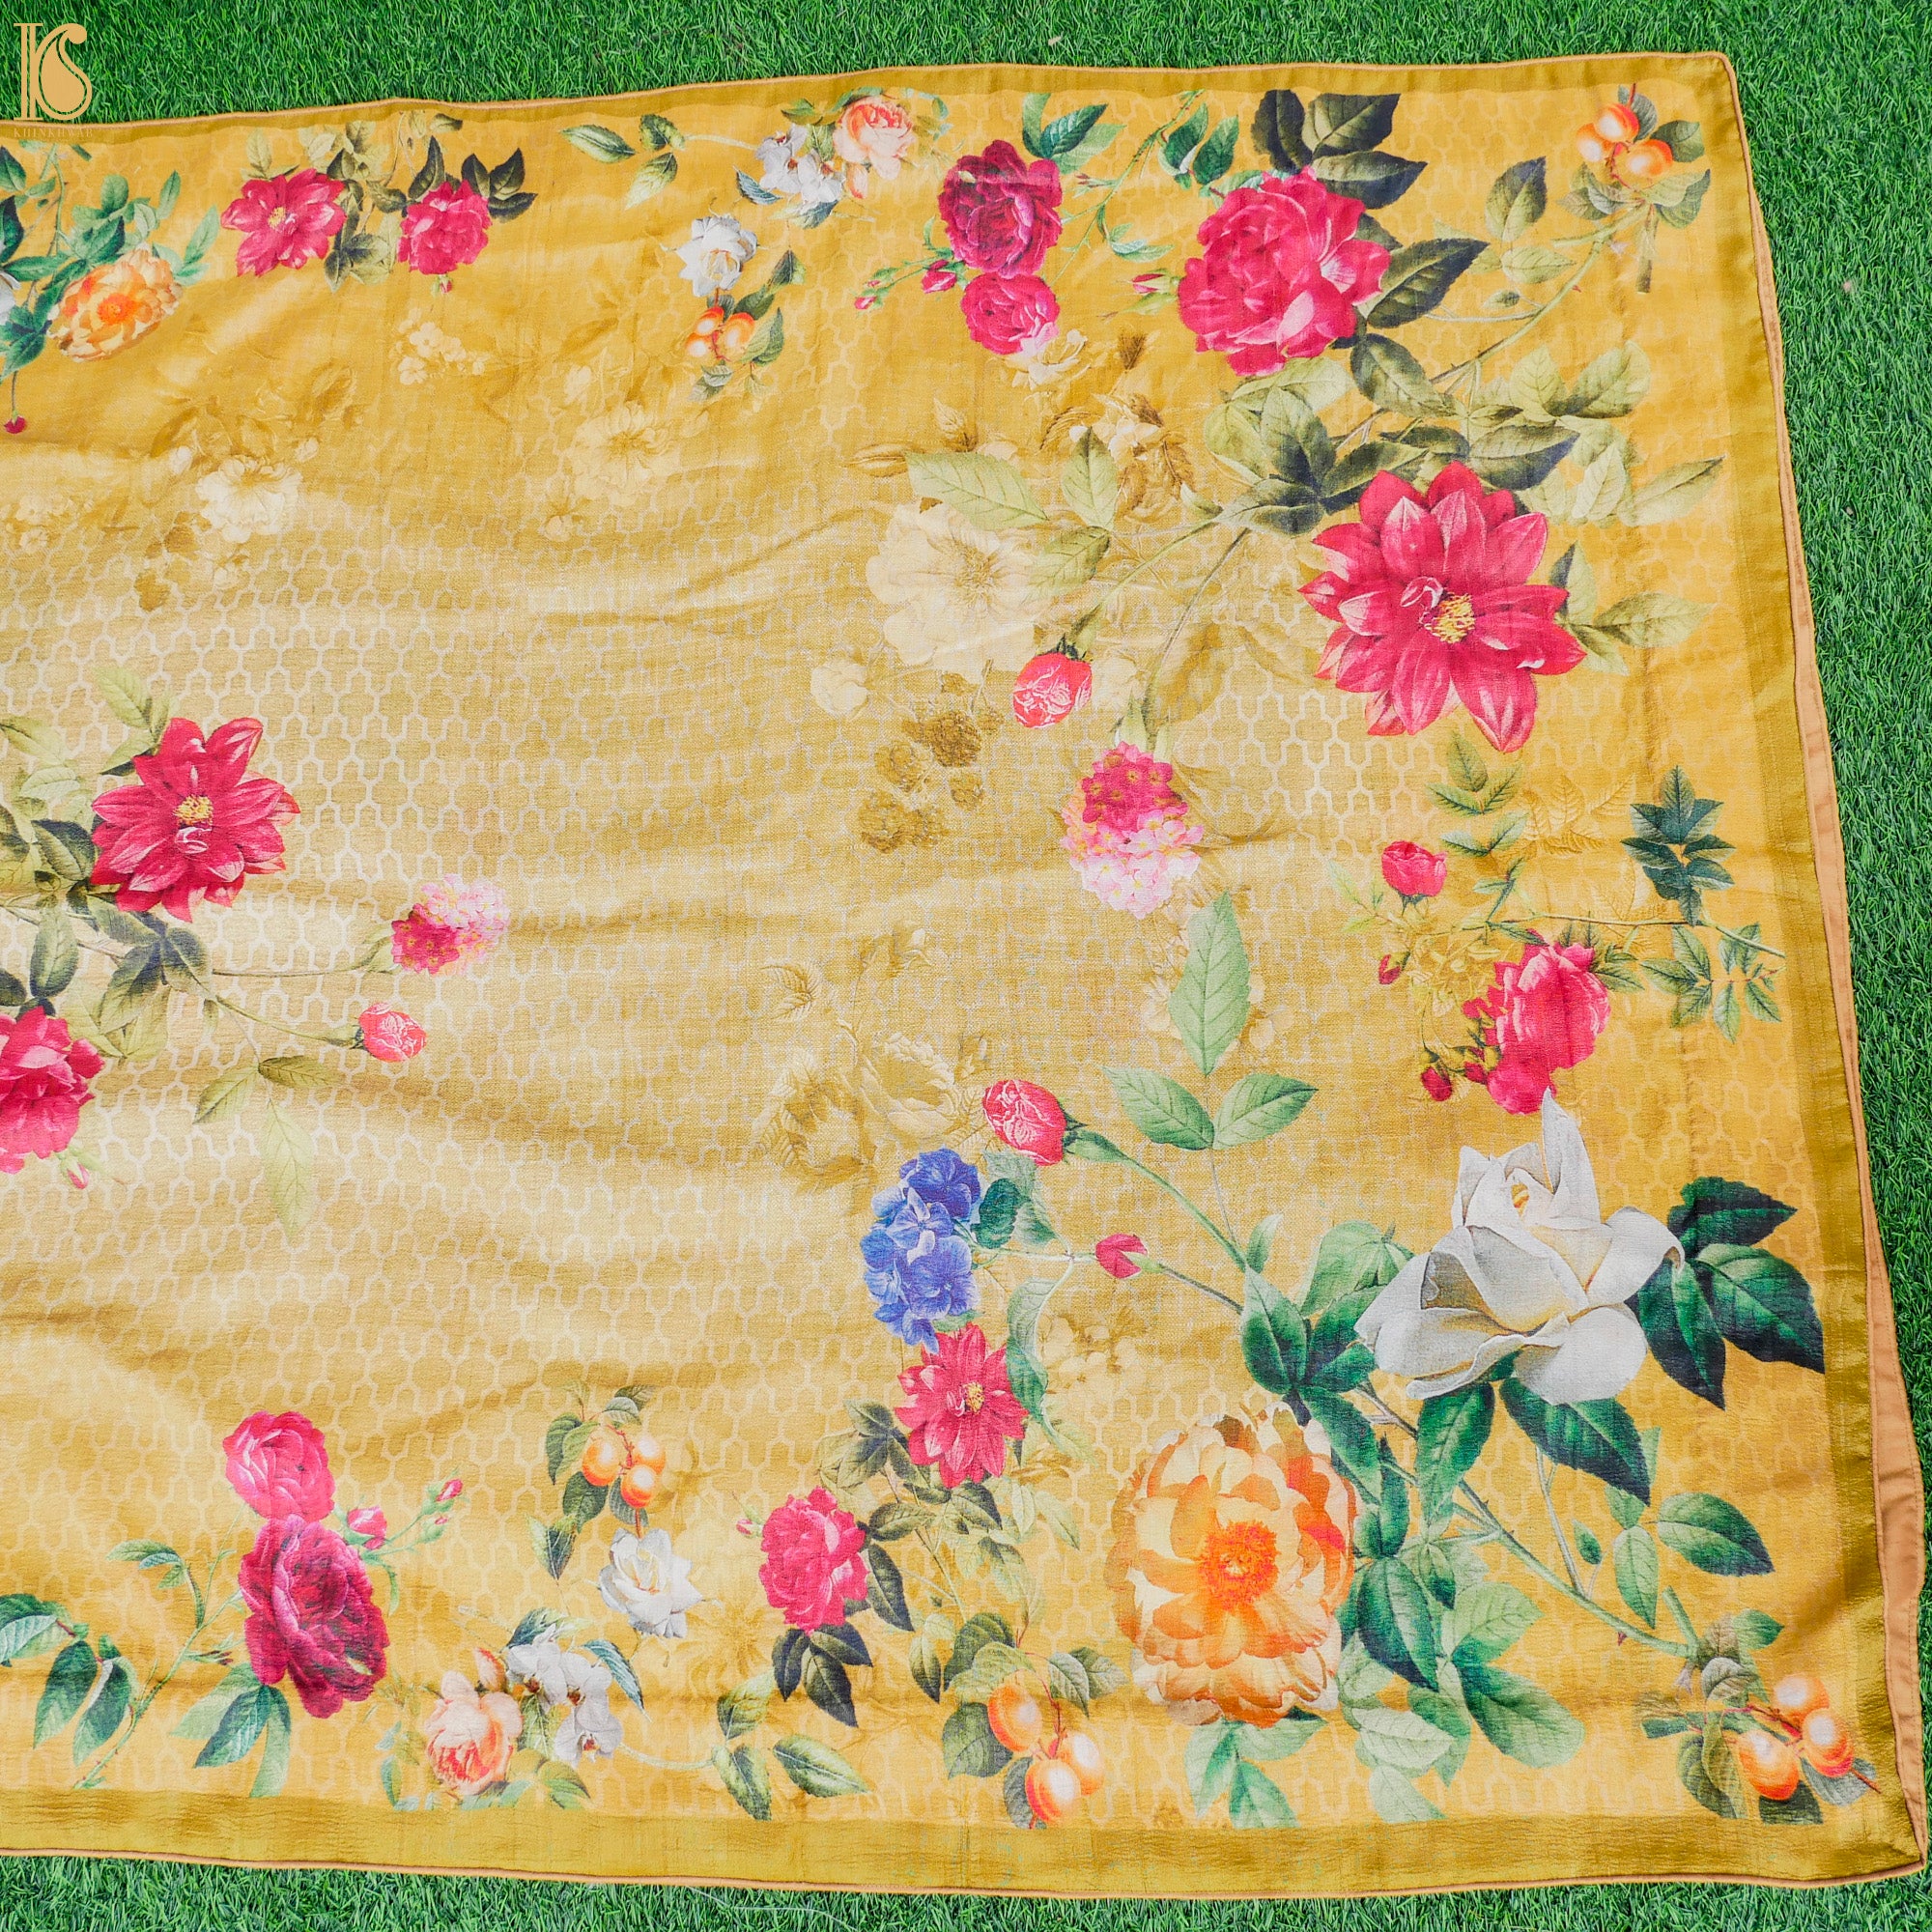 Nugget Yellow Pure Tussar Silk Print Kalidar Stitched Lehenga Set - Khinkhwab